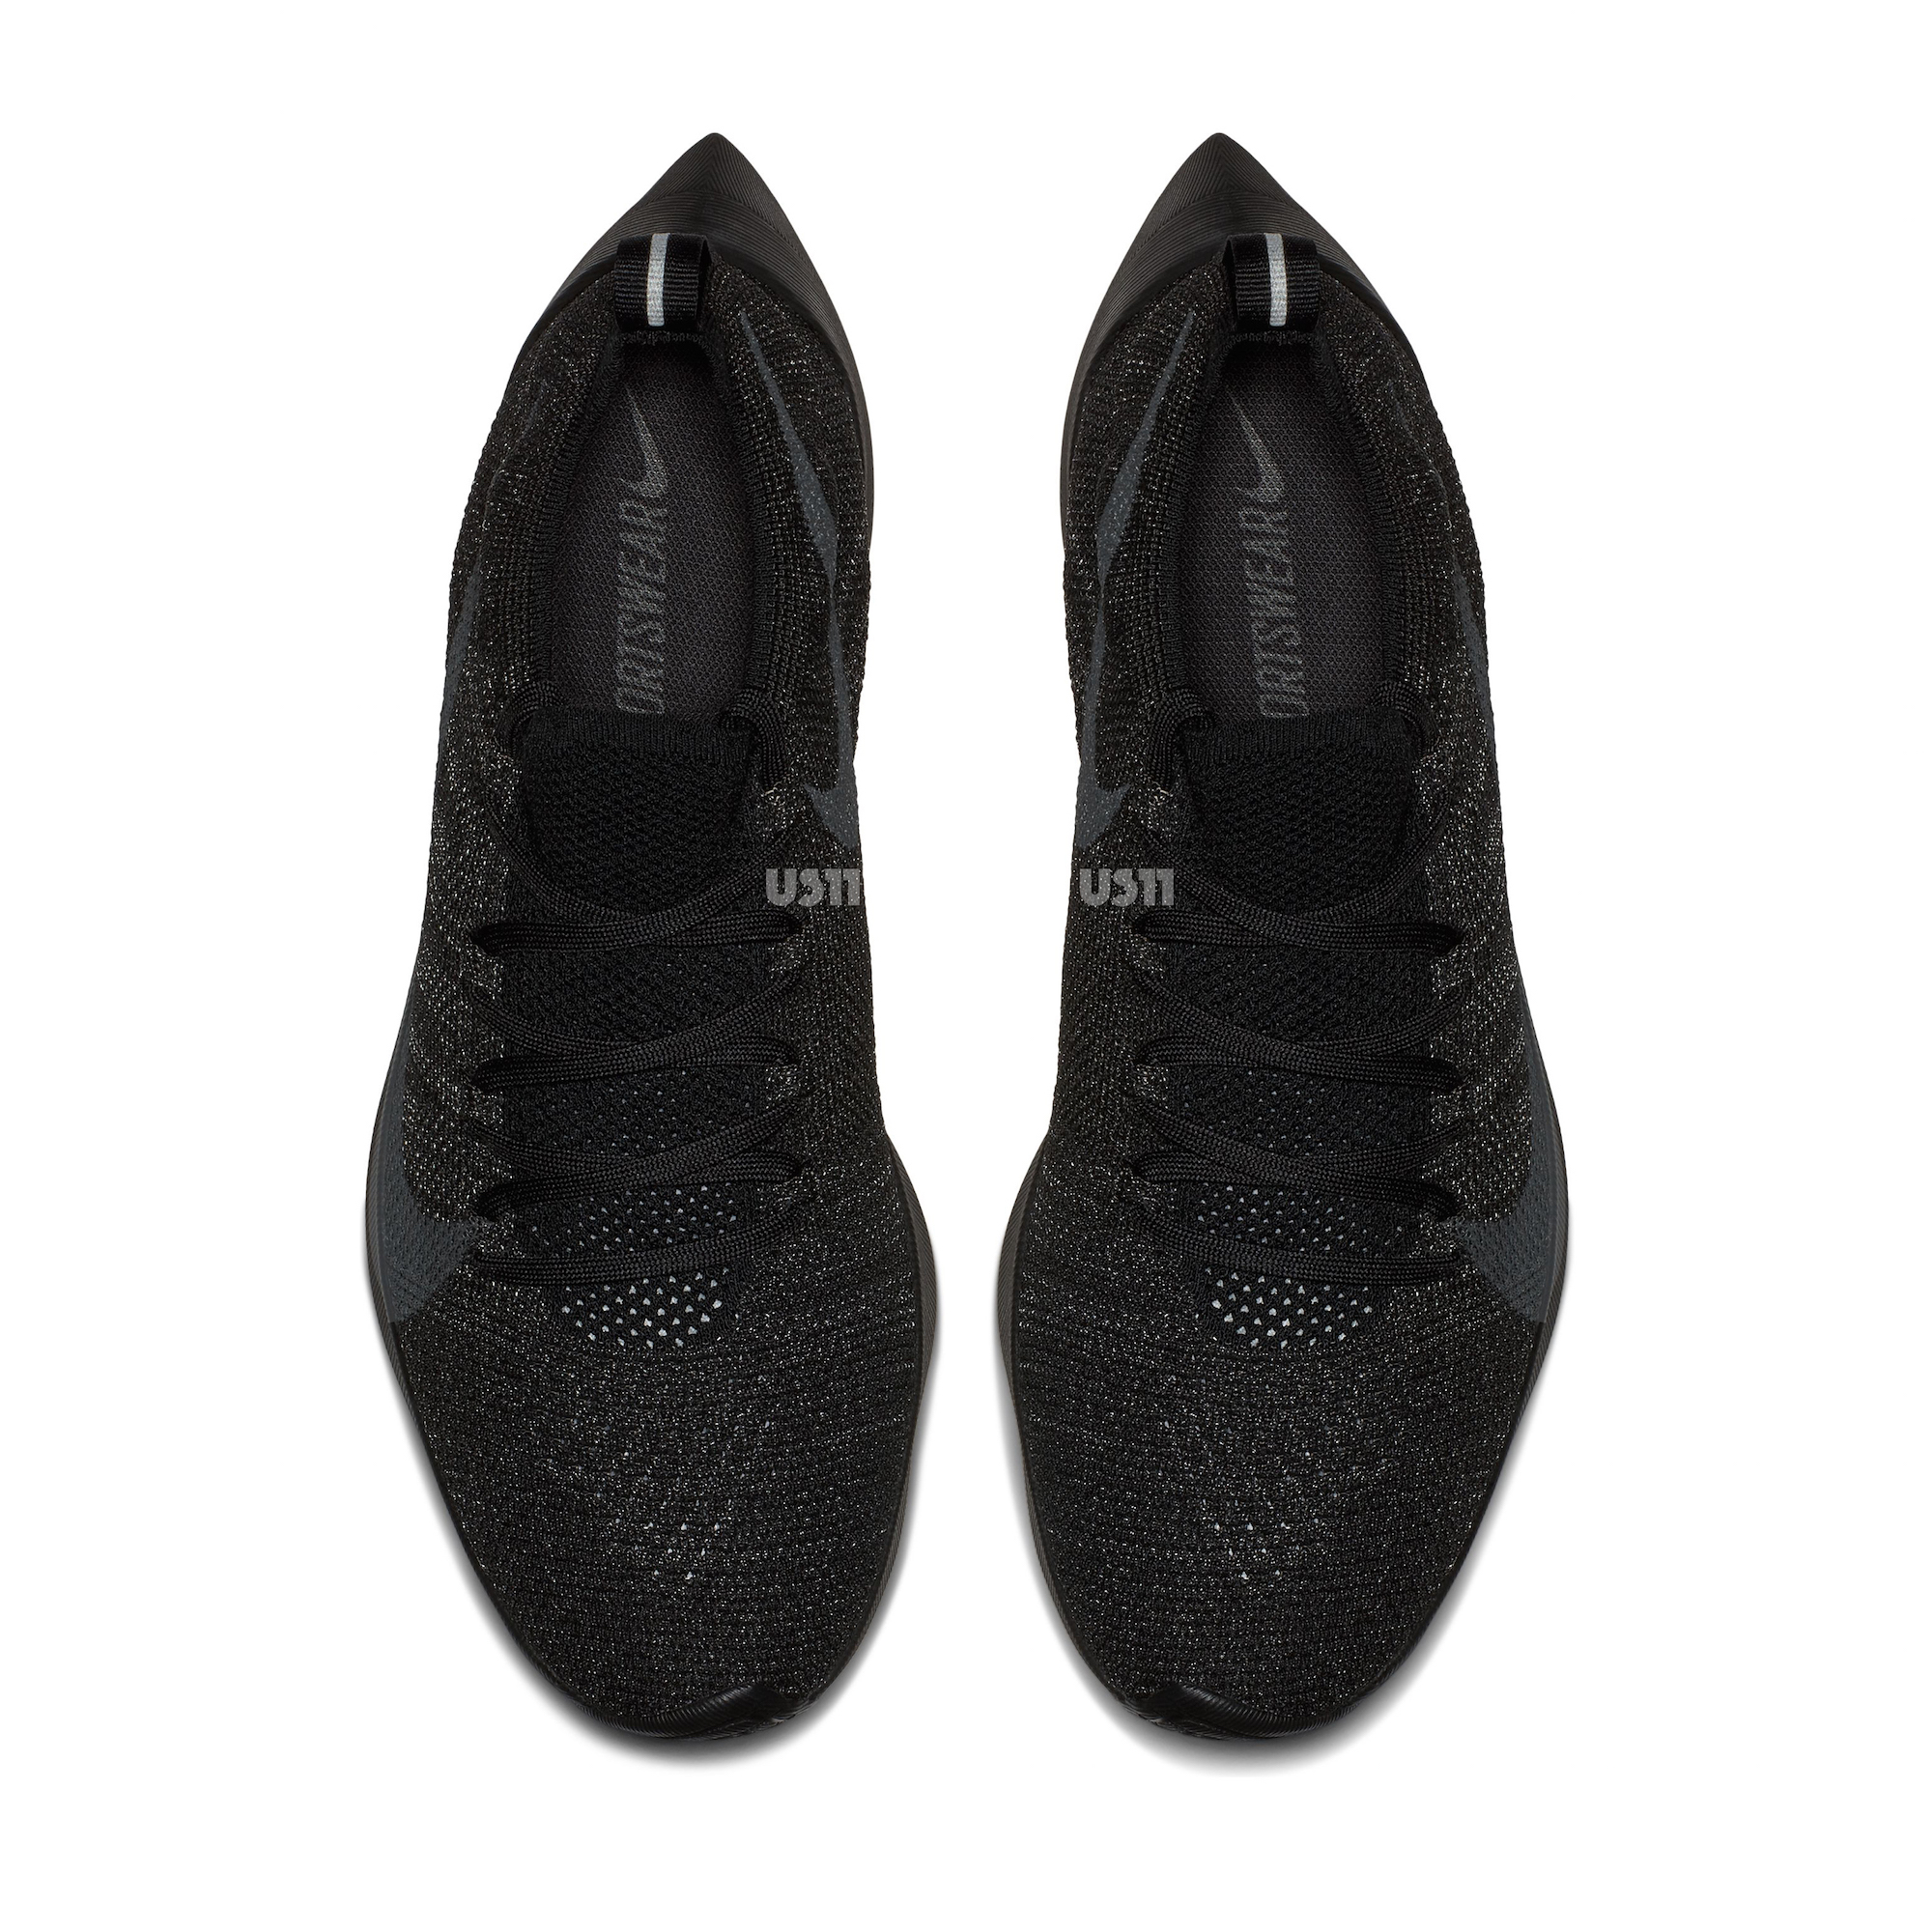 Nike-Vapor-Street-Flyknit-black-2.jpg